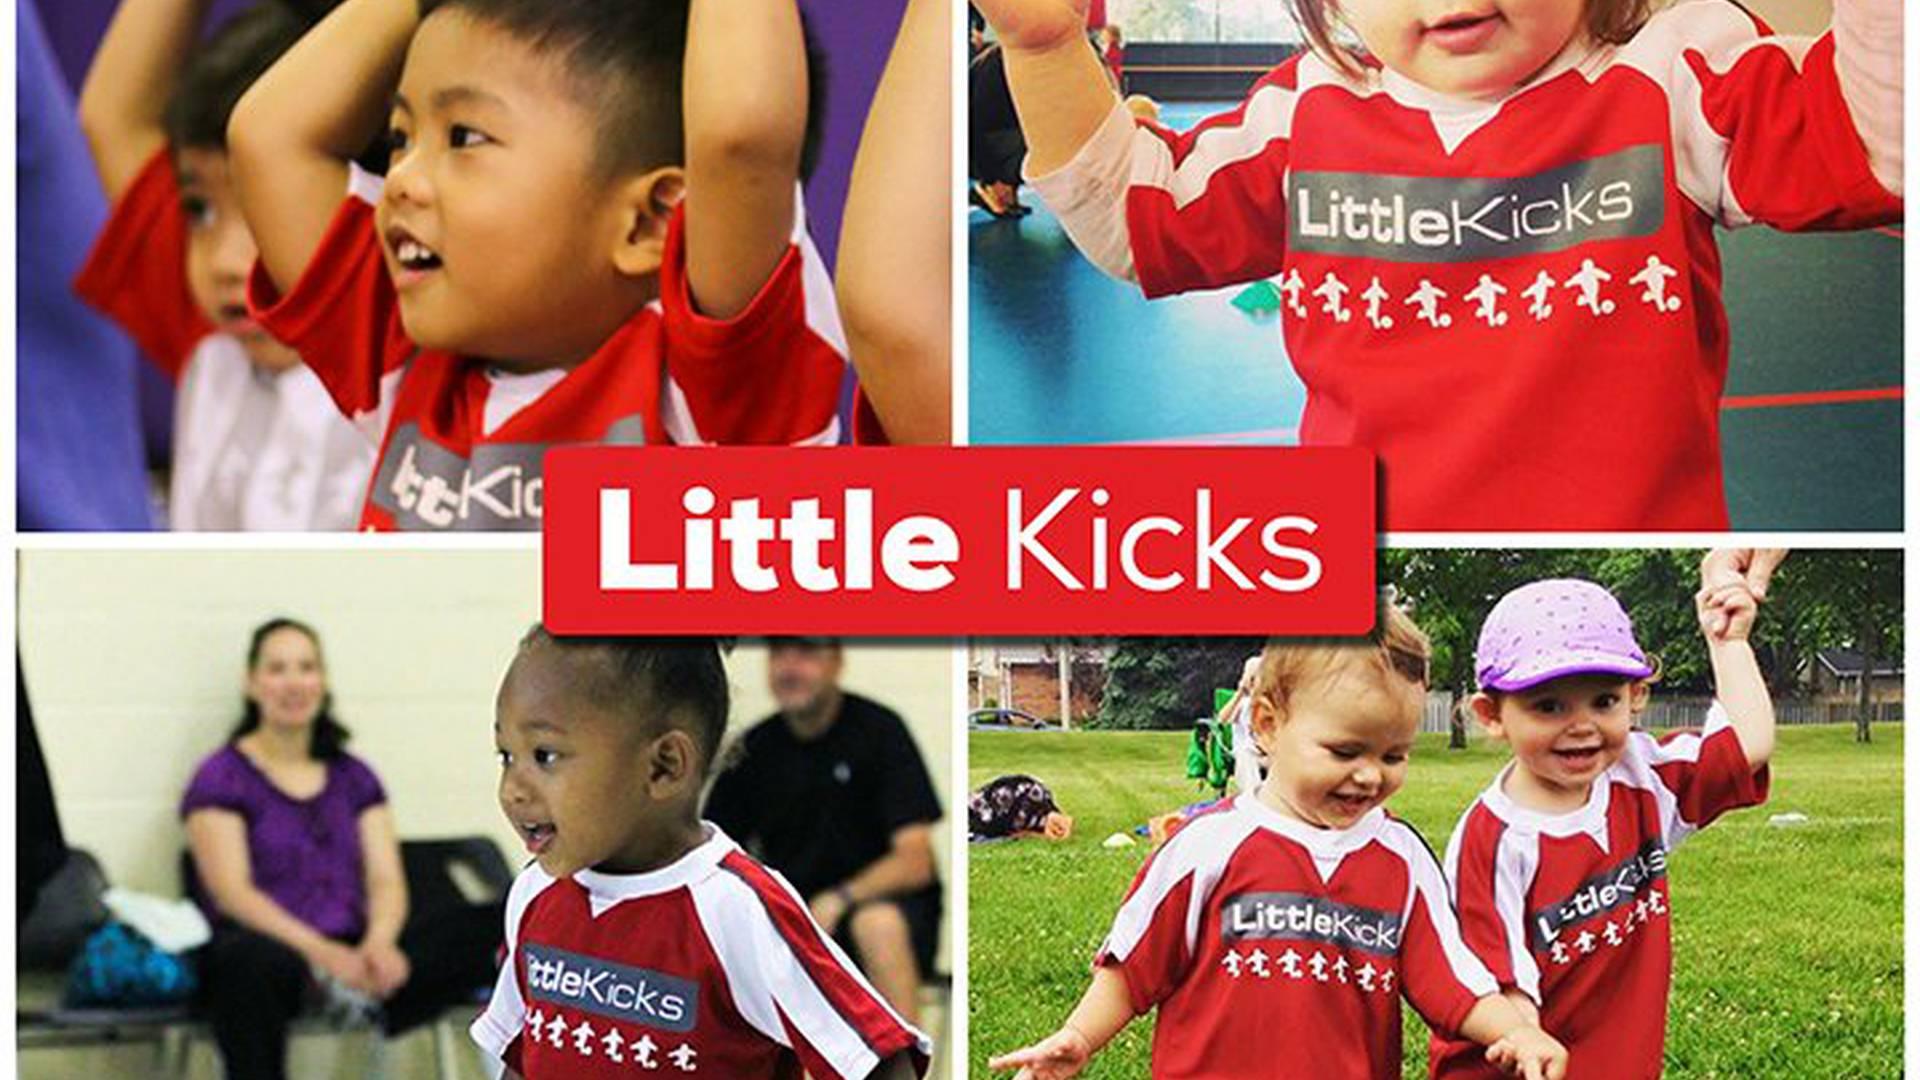 Little Kickers photo